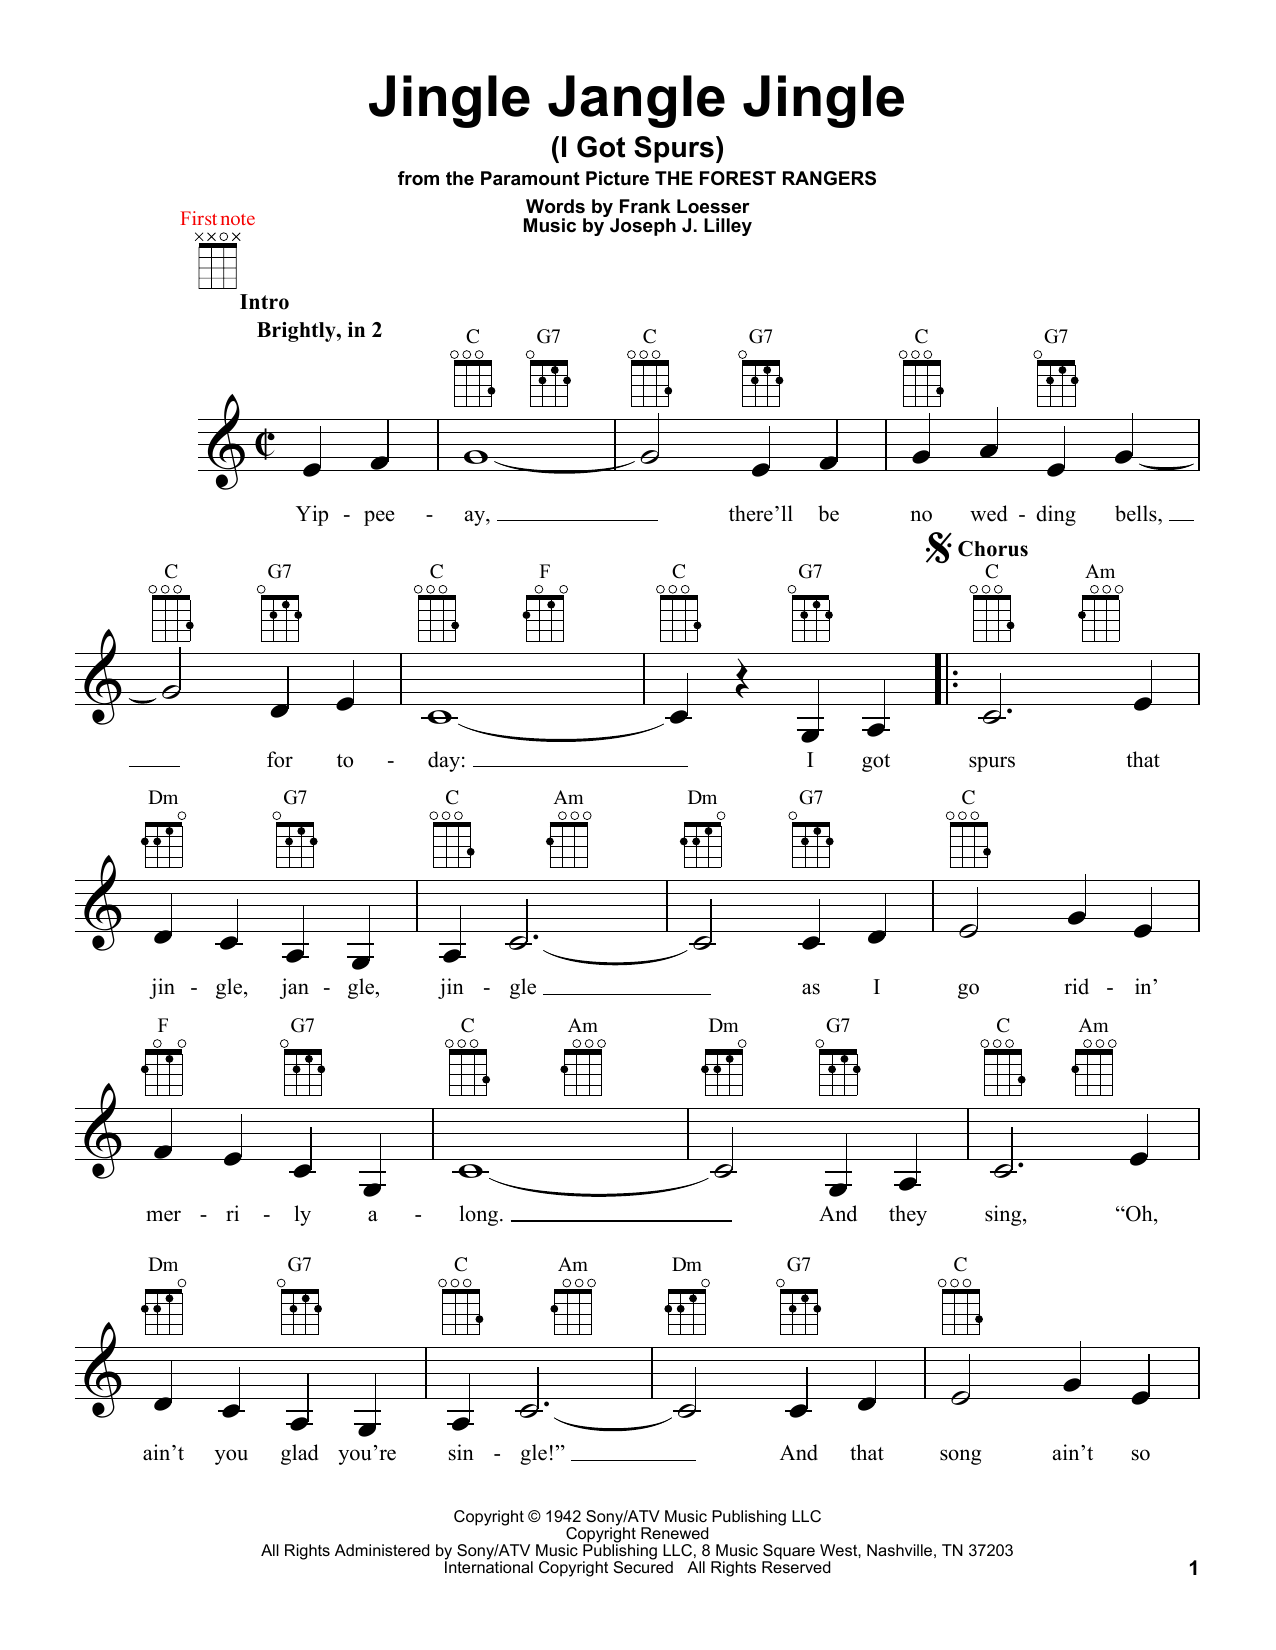 Frank Loesser Jingle Jangle Jingle (I Got Spurs) sheet music notes and chords arranged for Ukulele